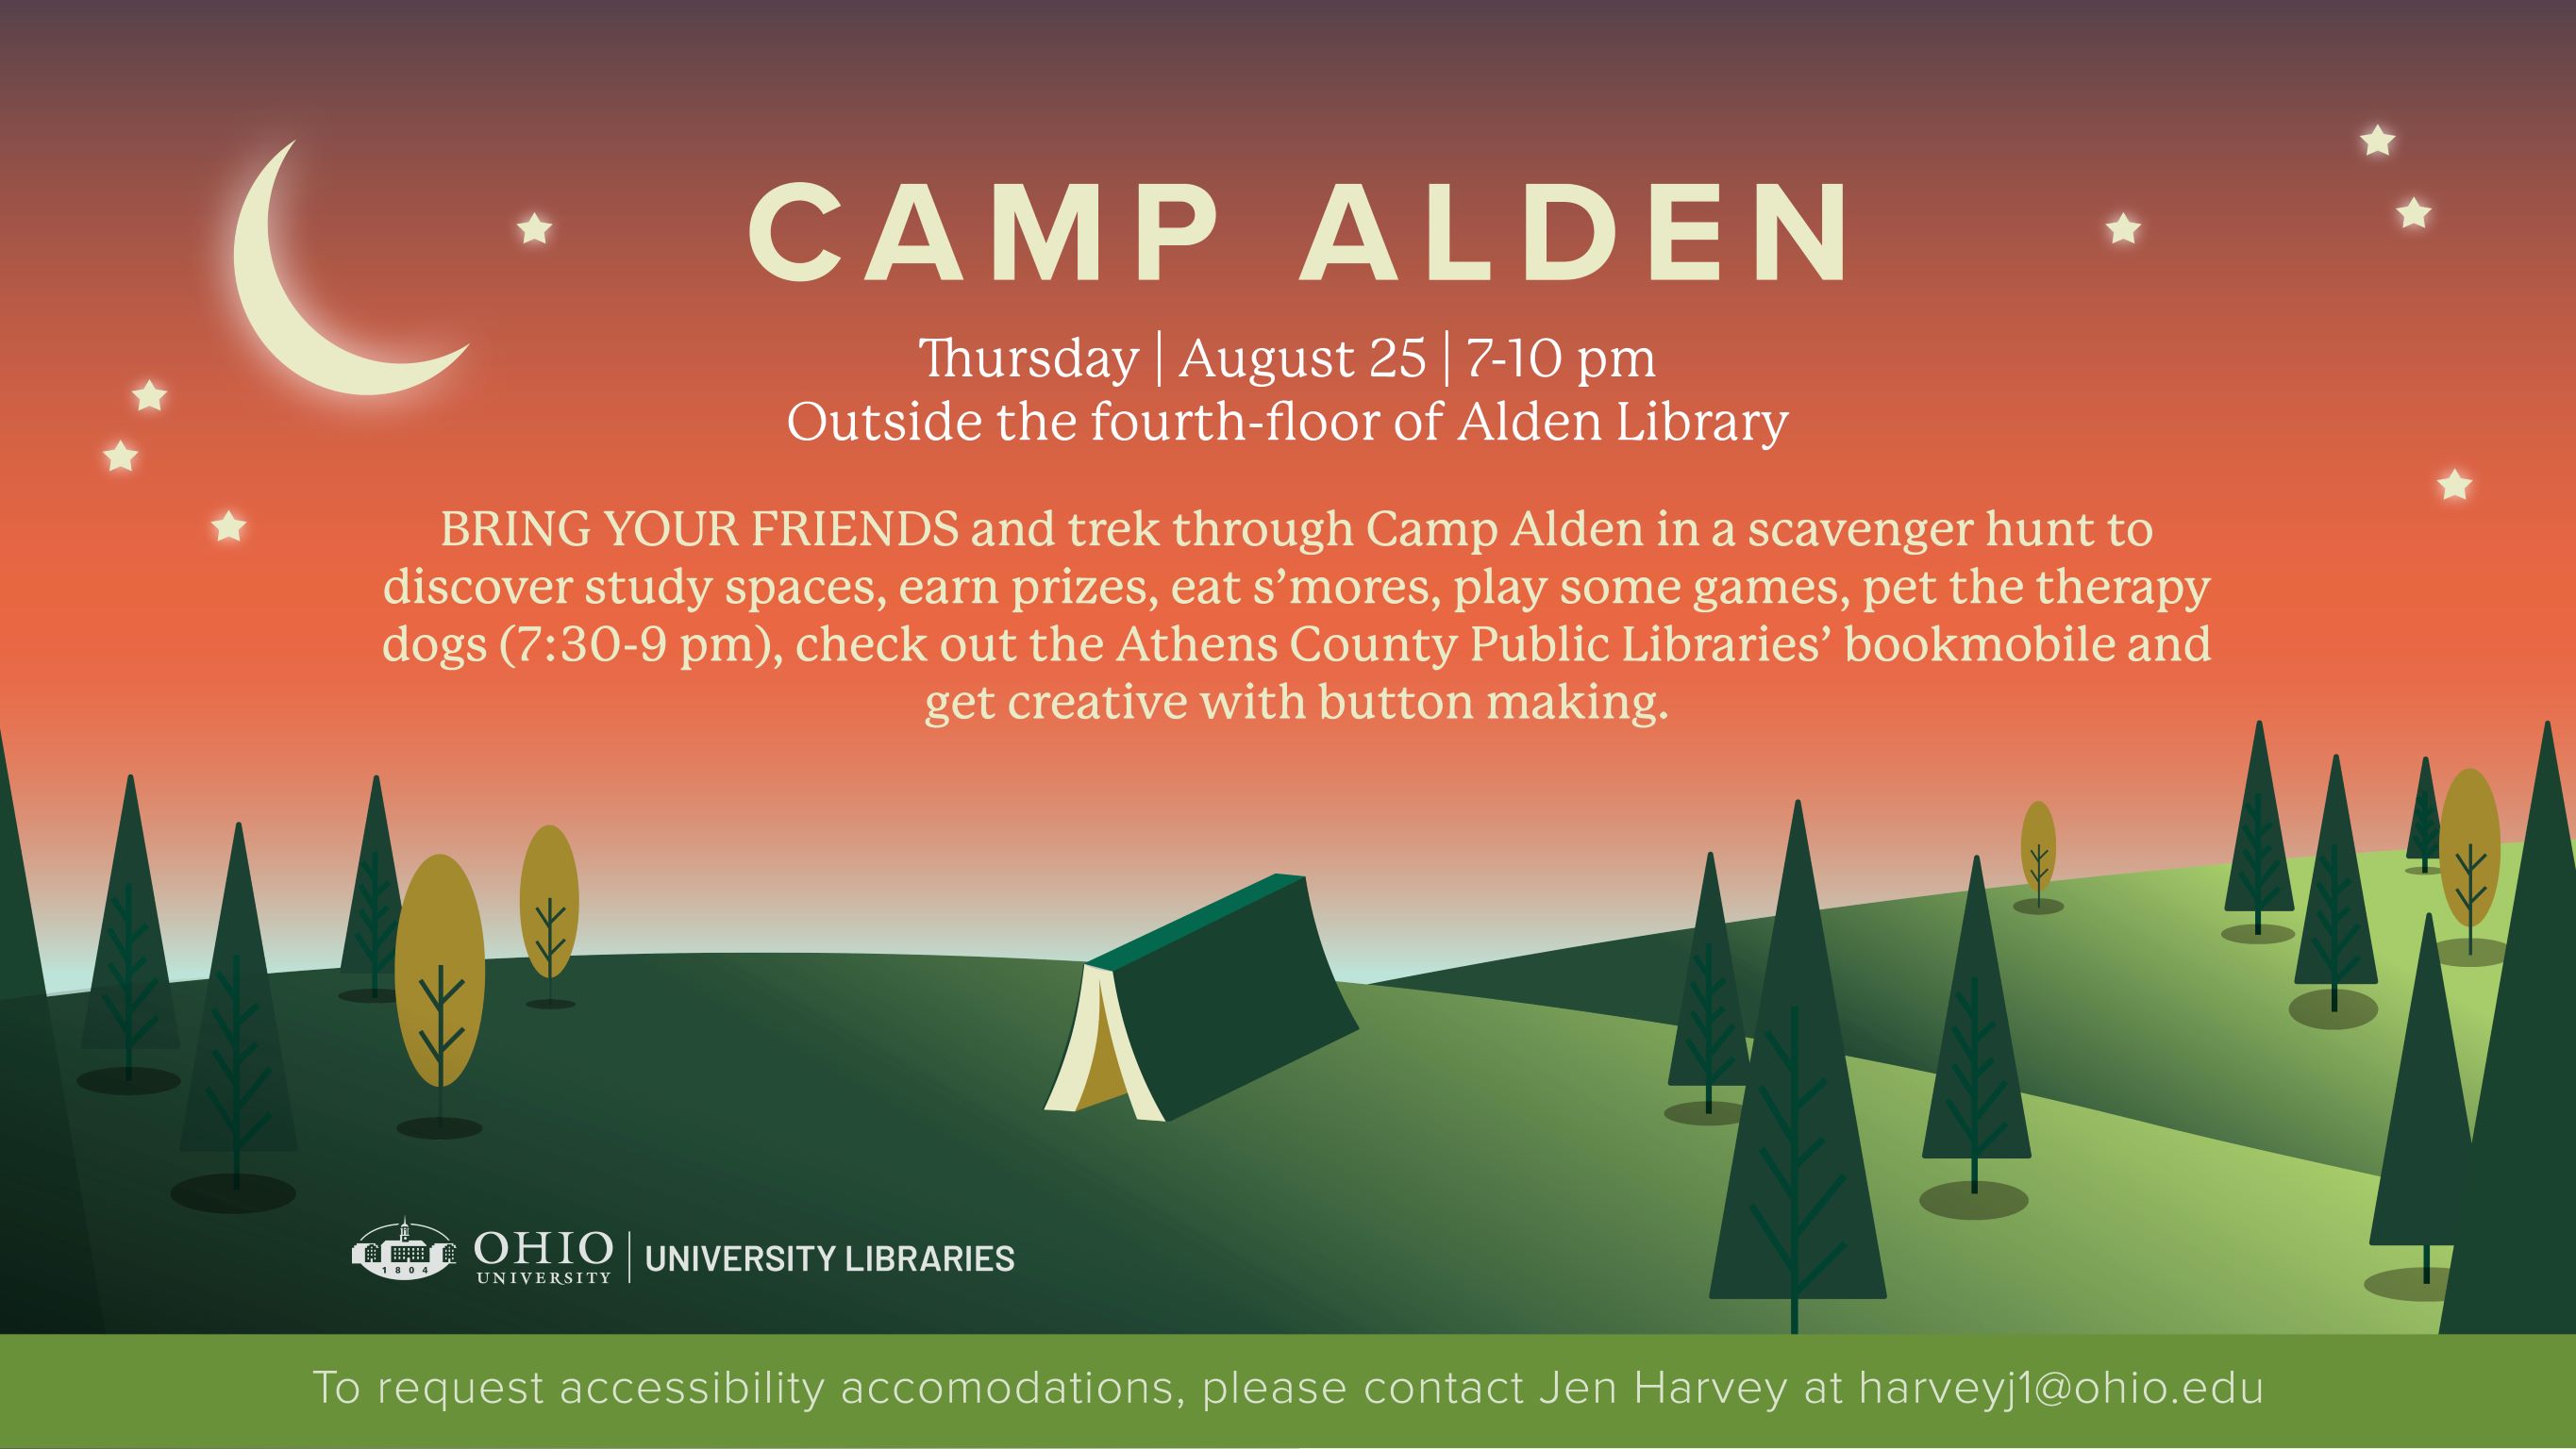 Camp Alden 2022 Web Banner Image featuring details as described below